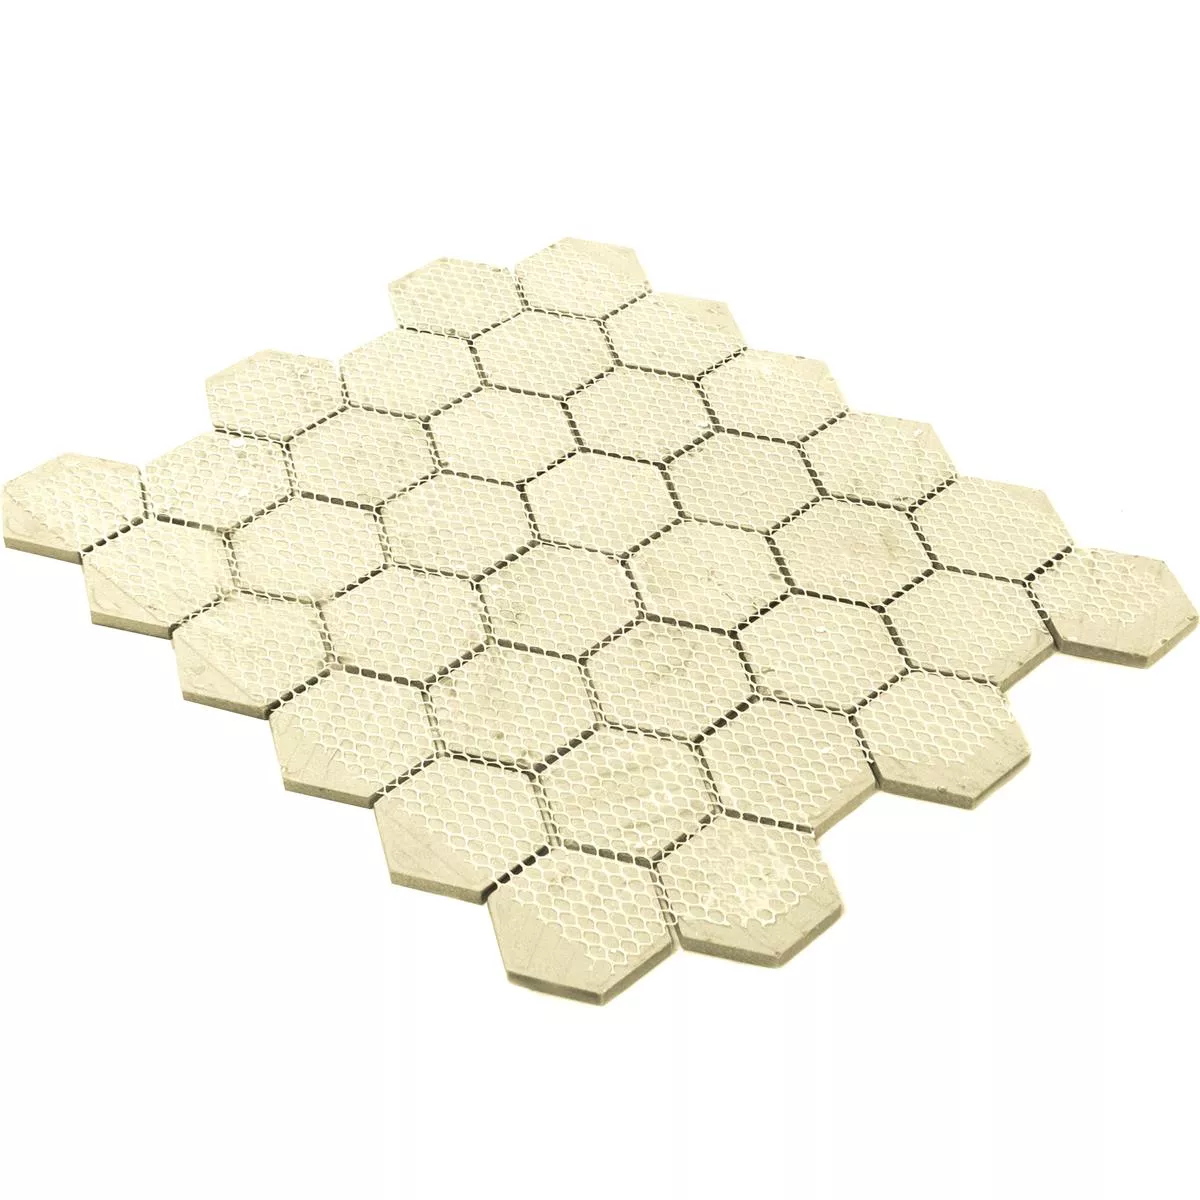 Keramik Mosaikfliesen Eldertown Hexagon Weiß